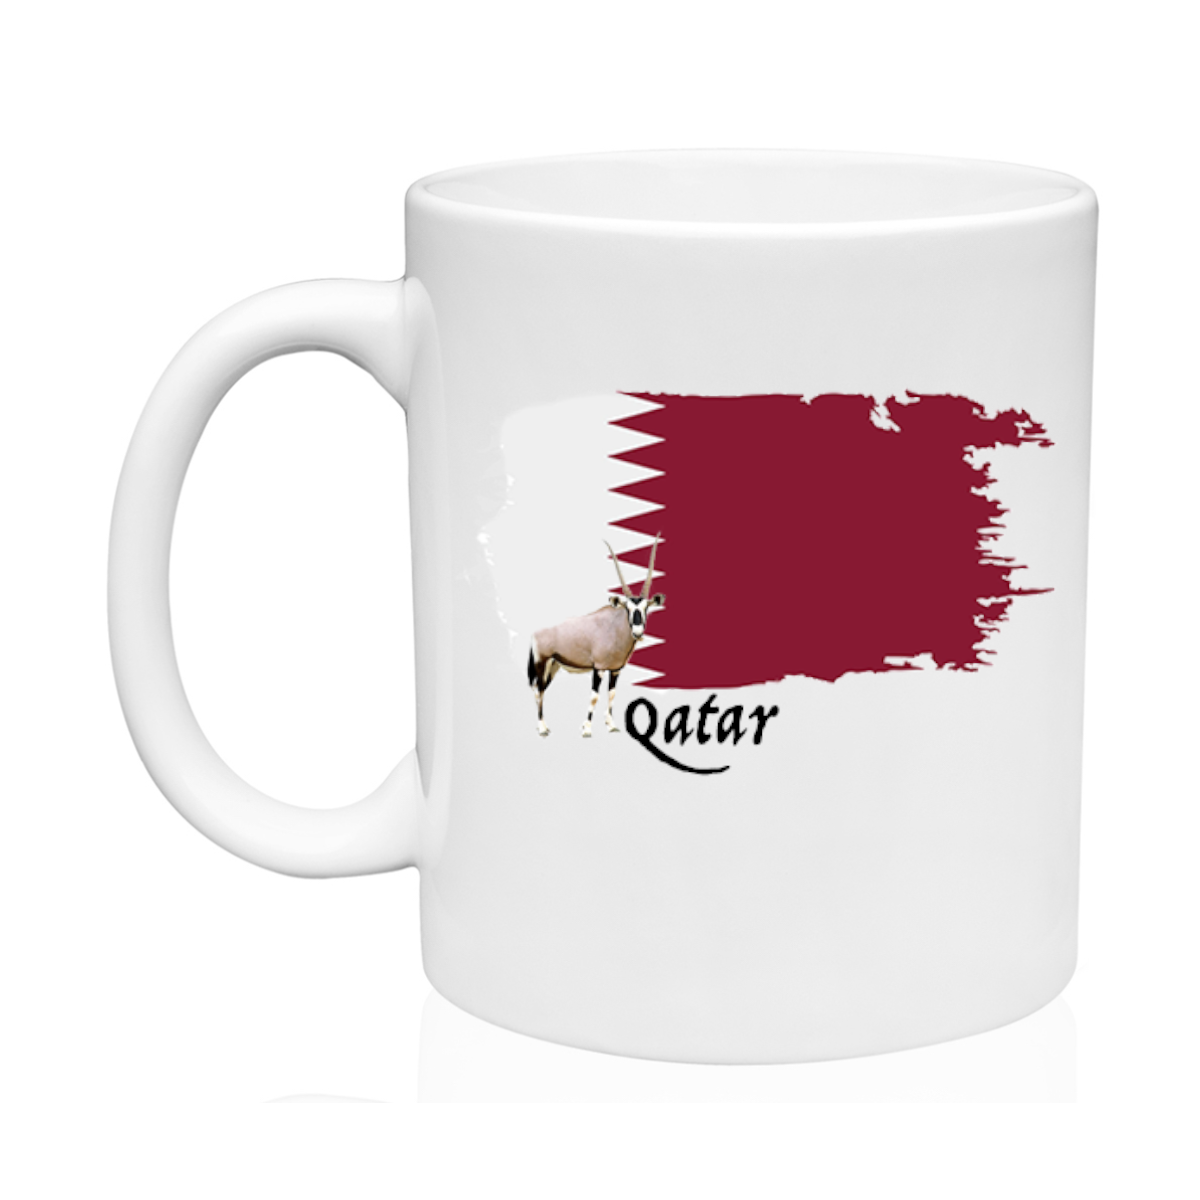 AGAD Turista (I Love Qatar Ceramic Mug)